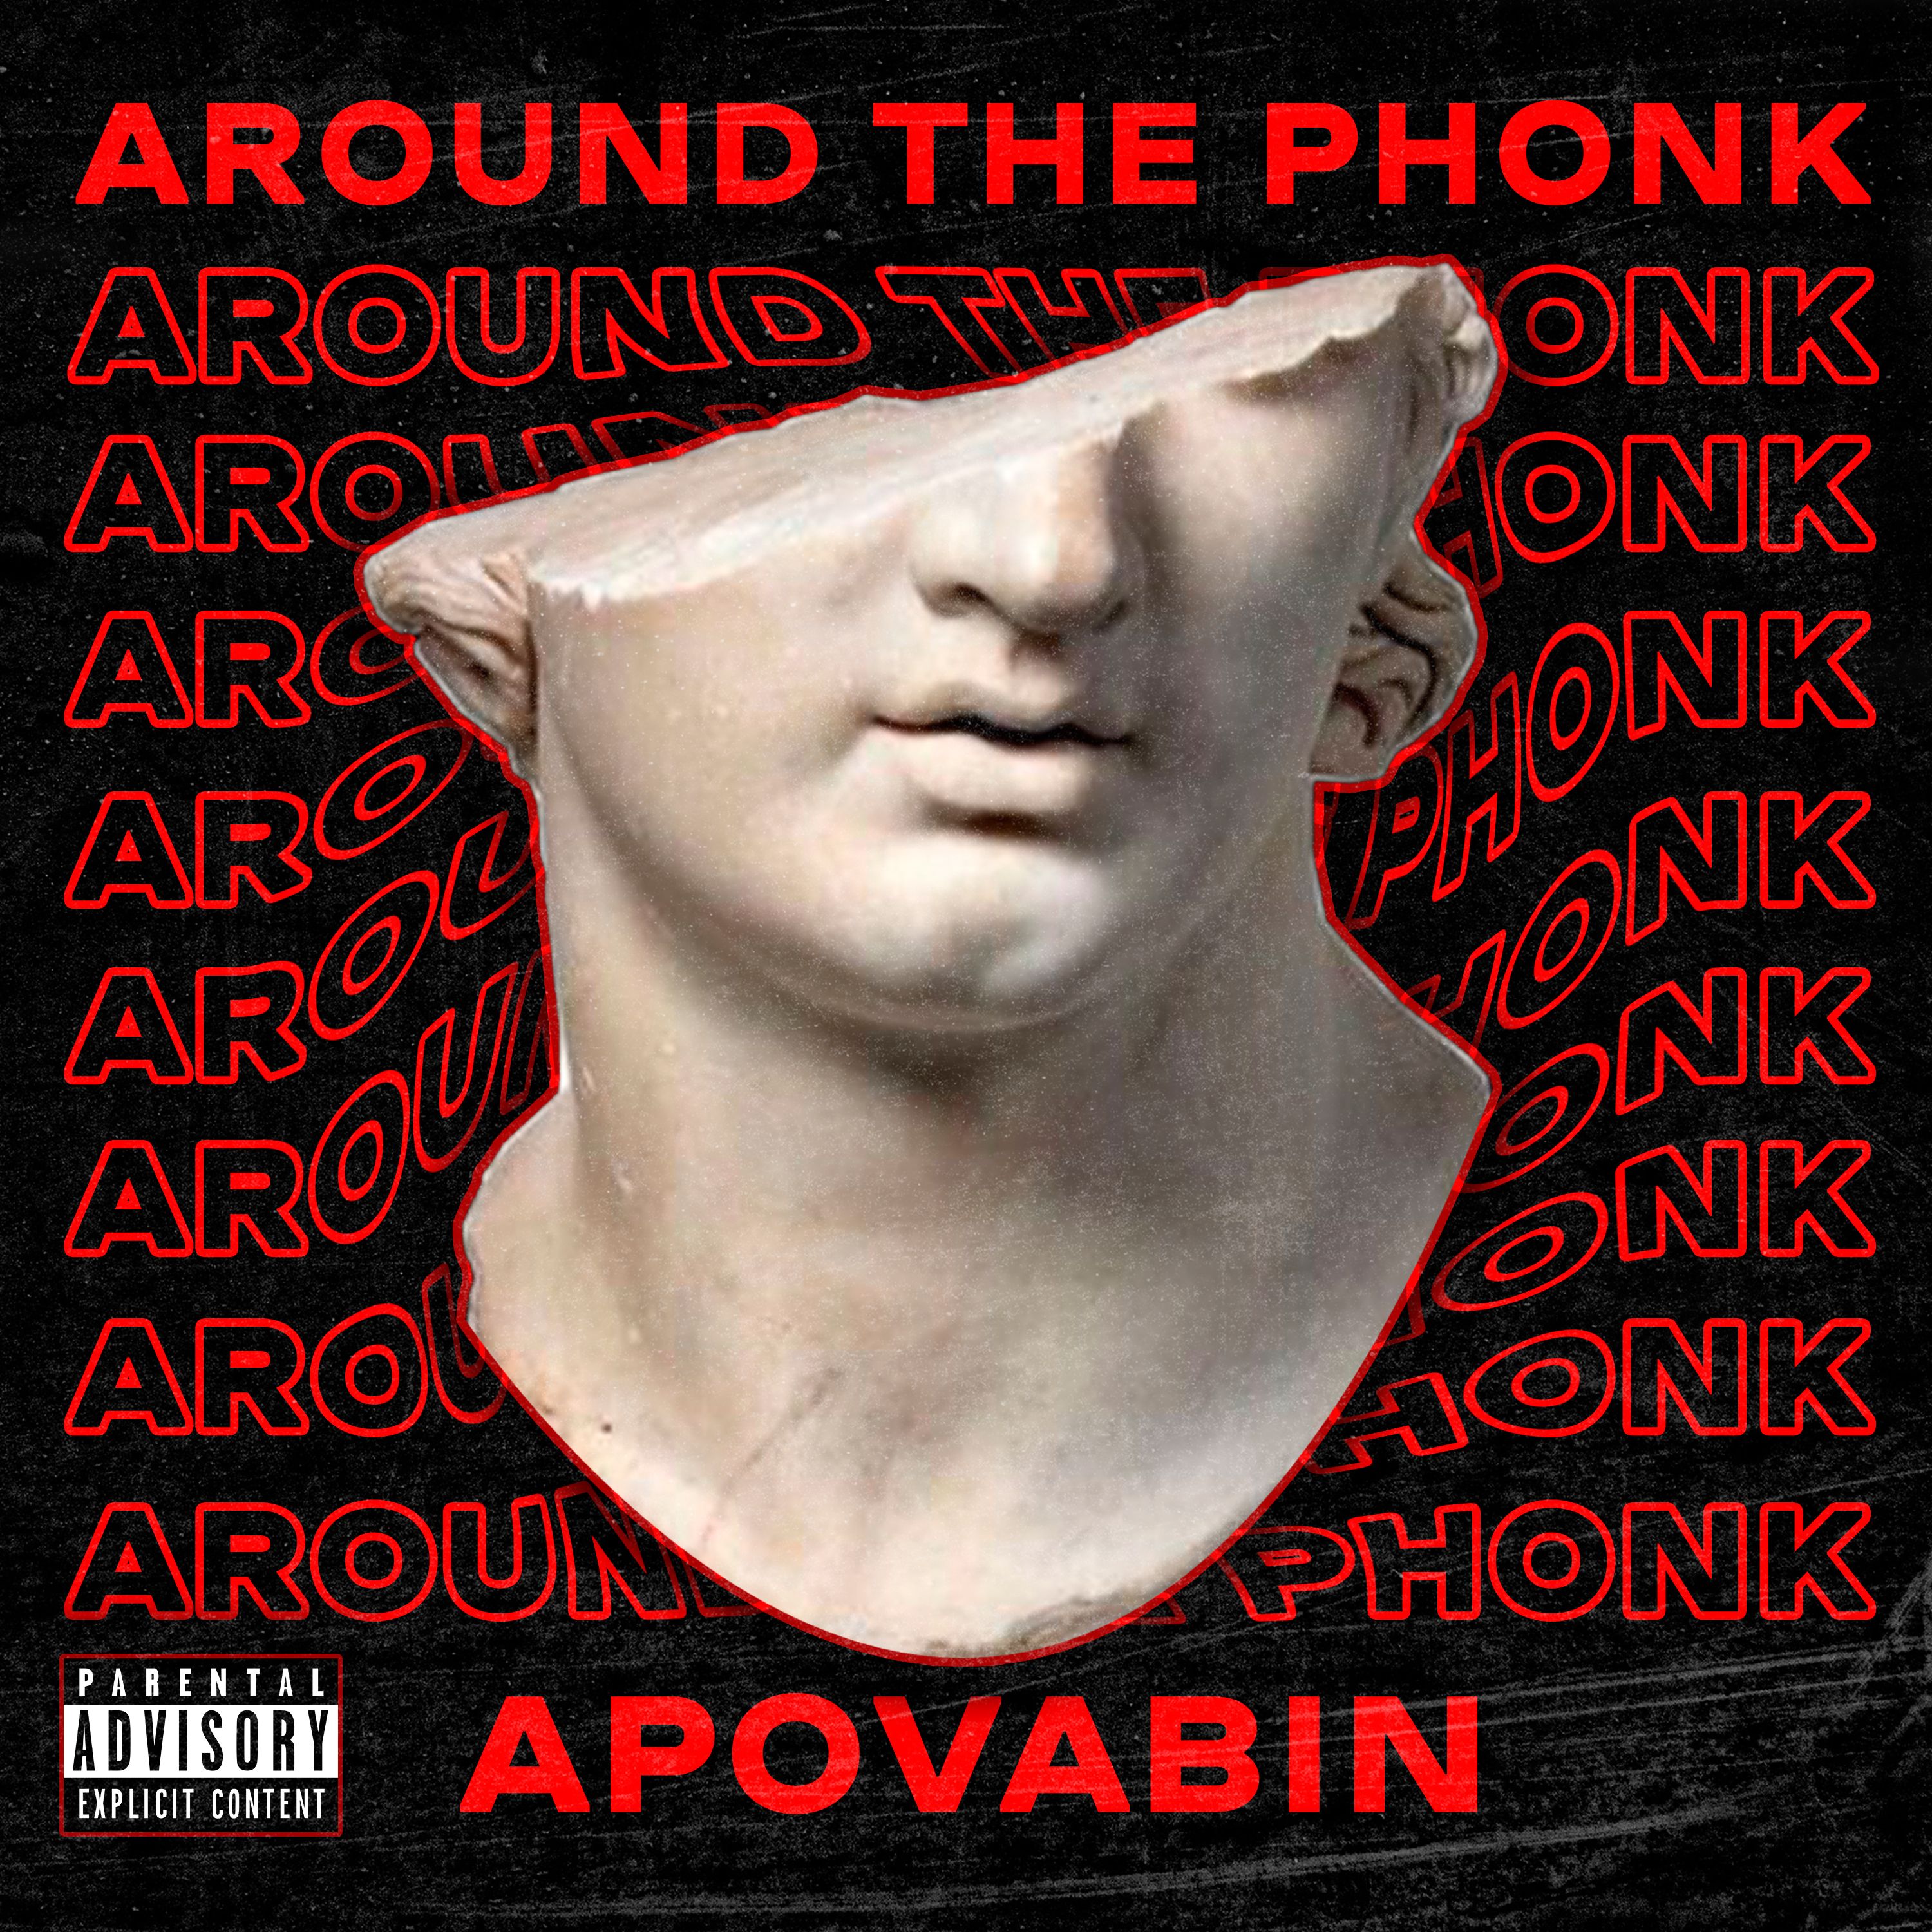 Shkarko Apovabin - AROUND THE PHONK